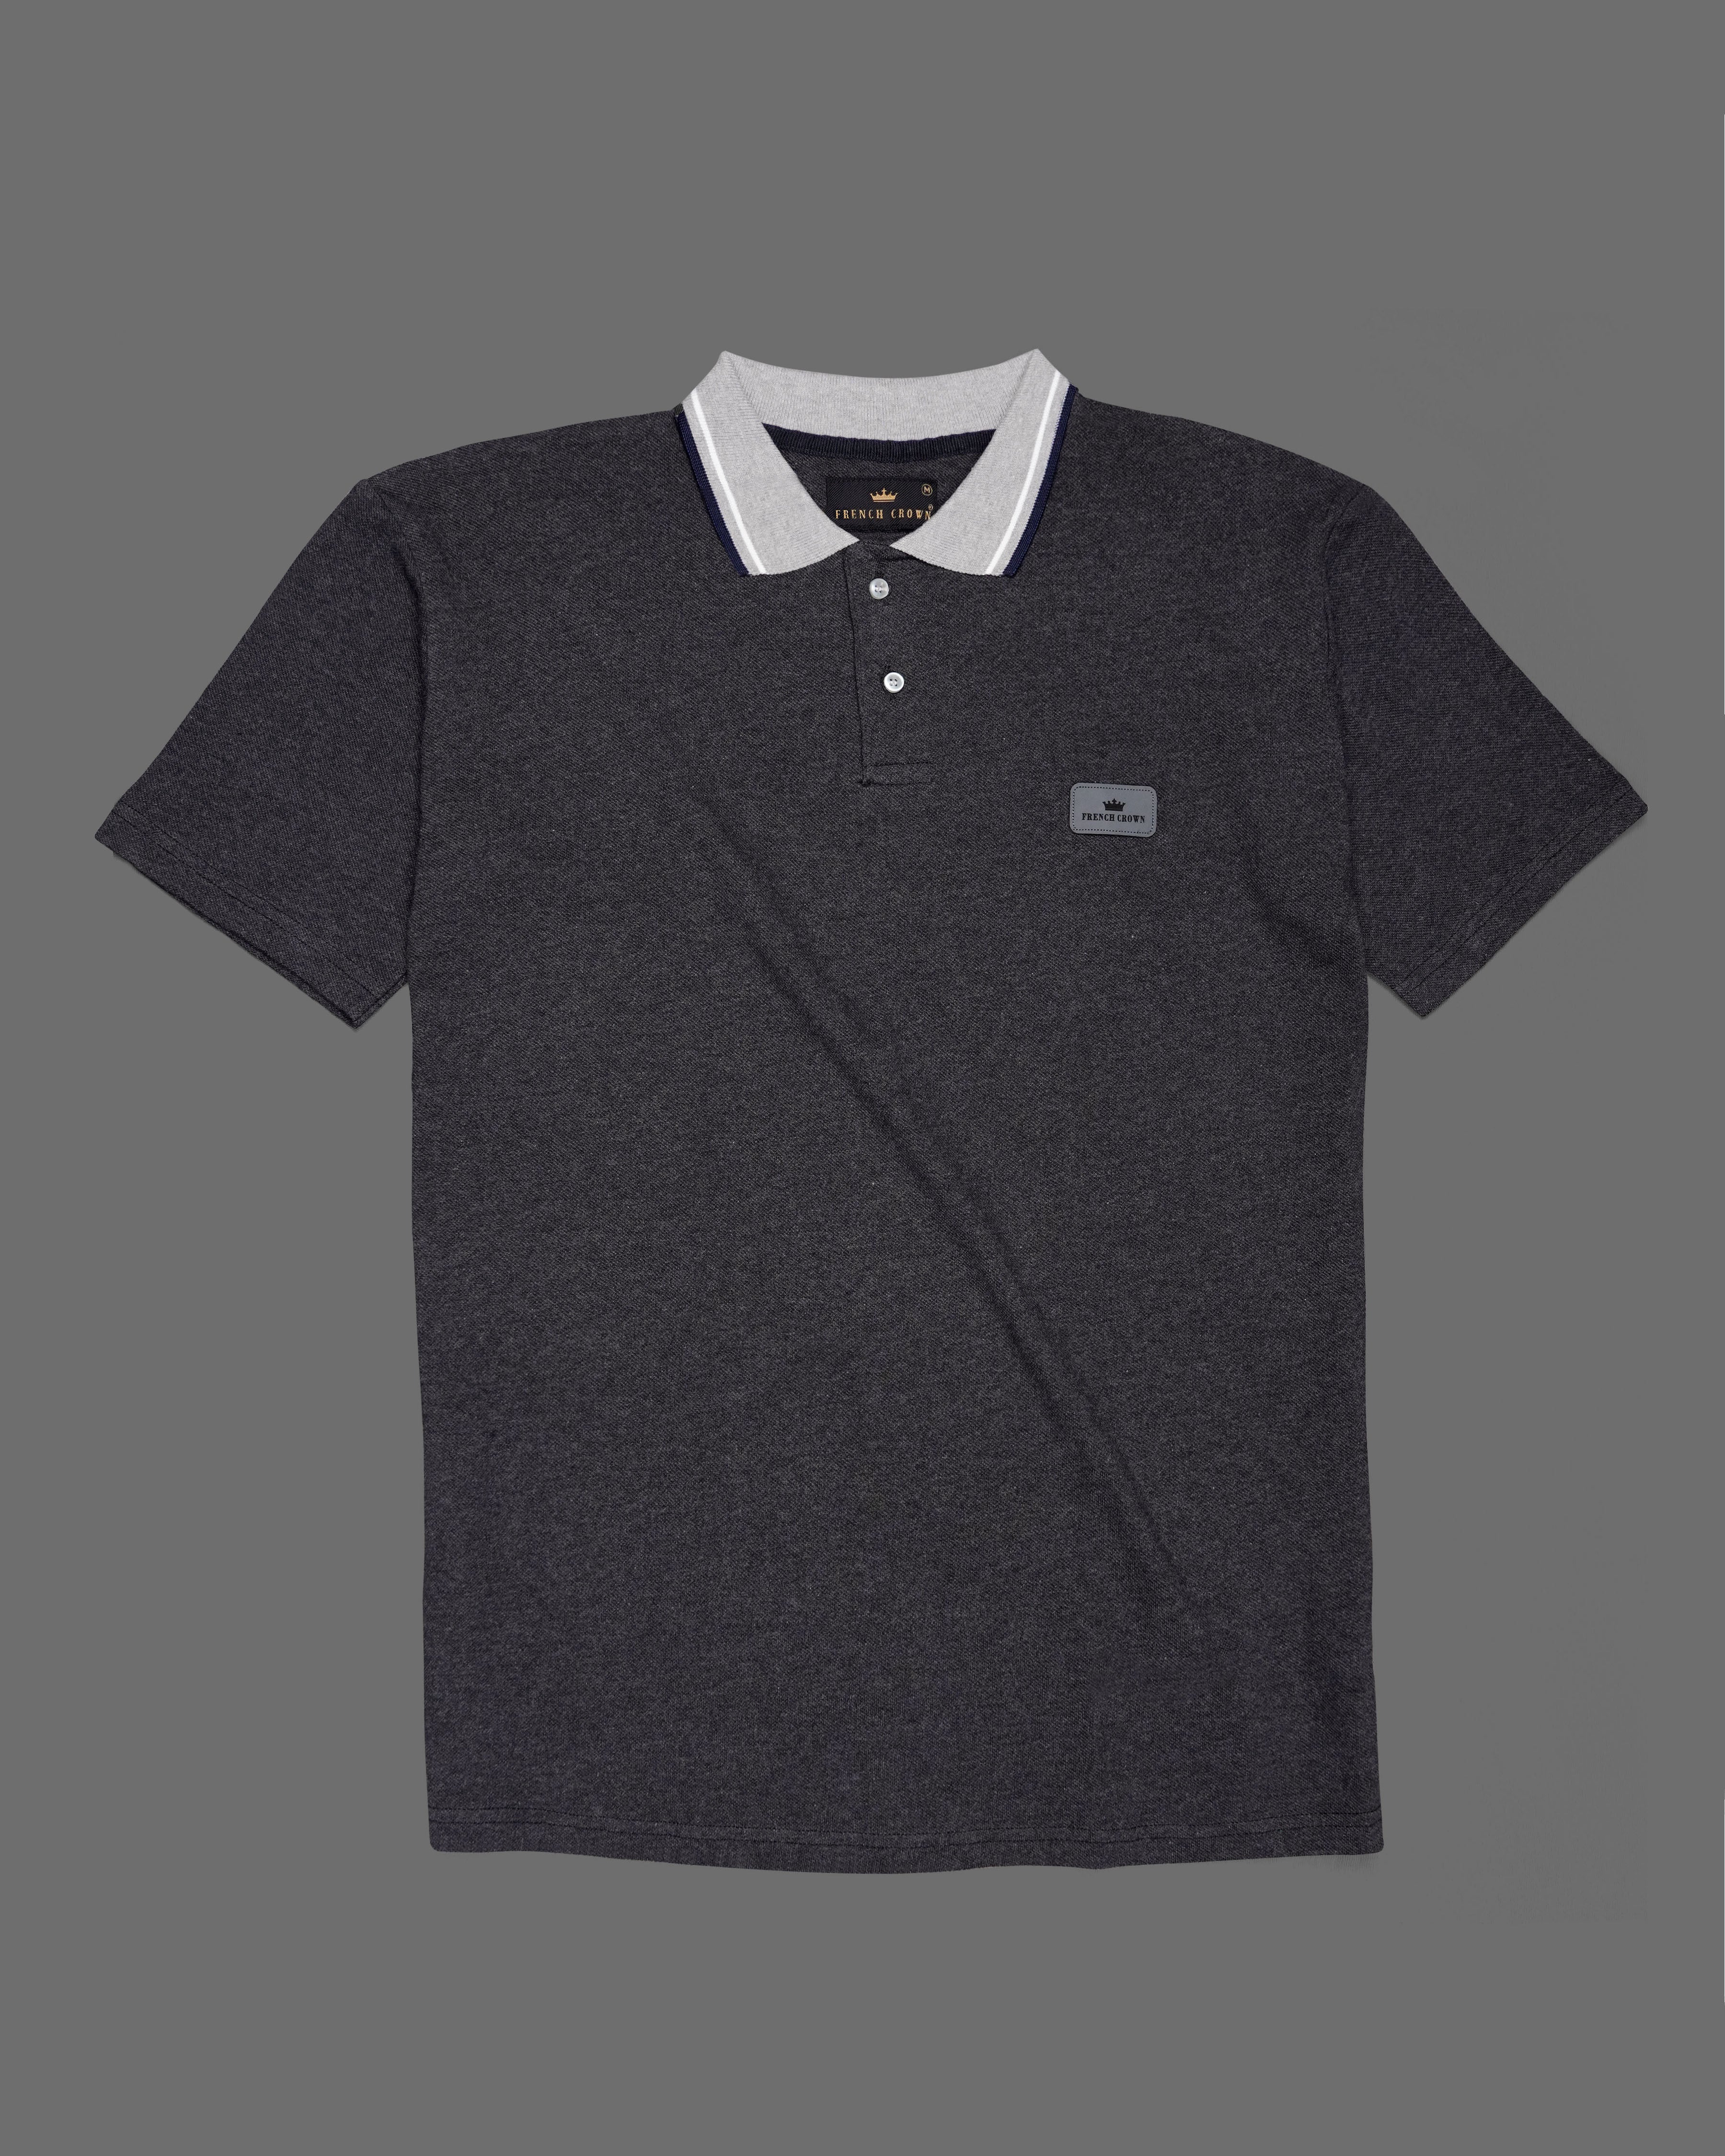 Tuatara Gray Half Sleeves Super Soft Premium Cotton Polo T-Shirt